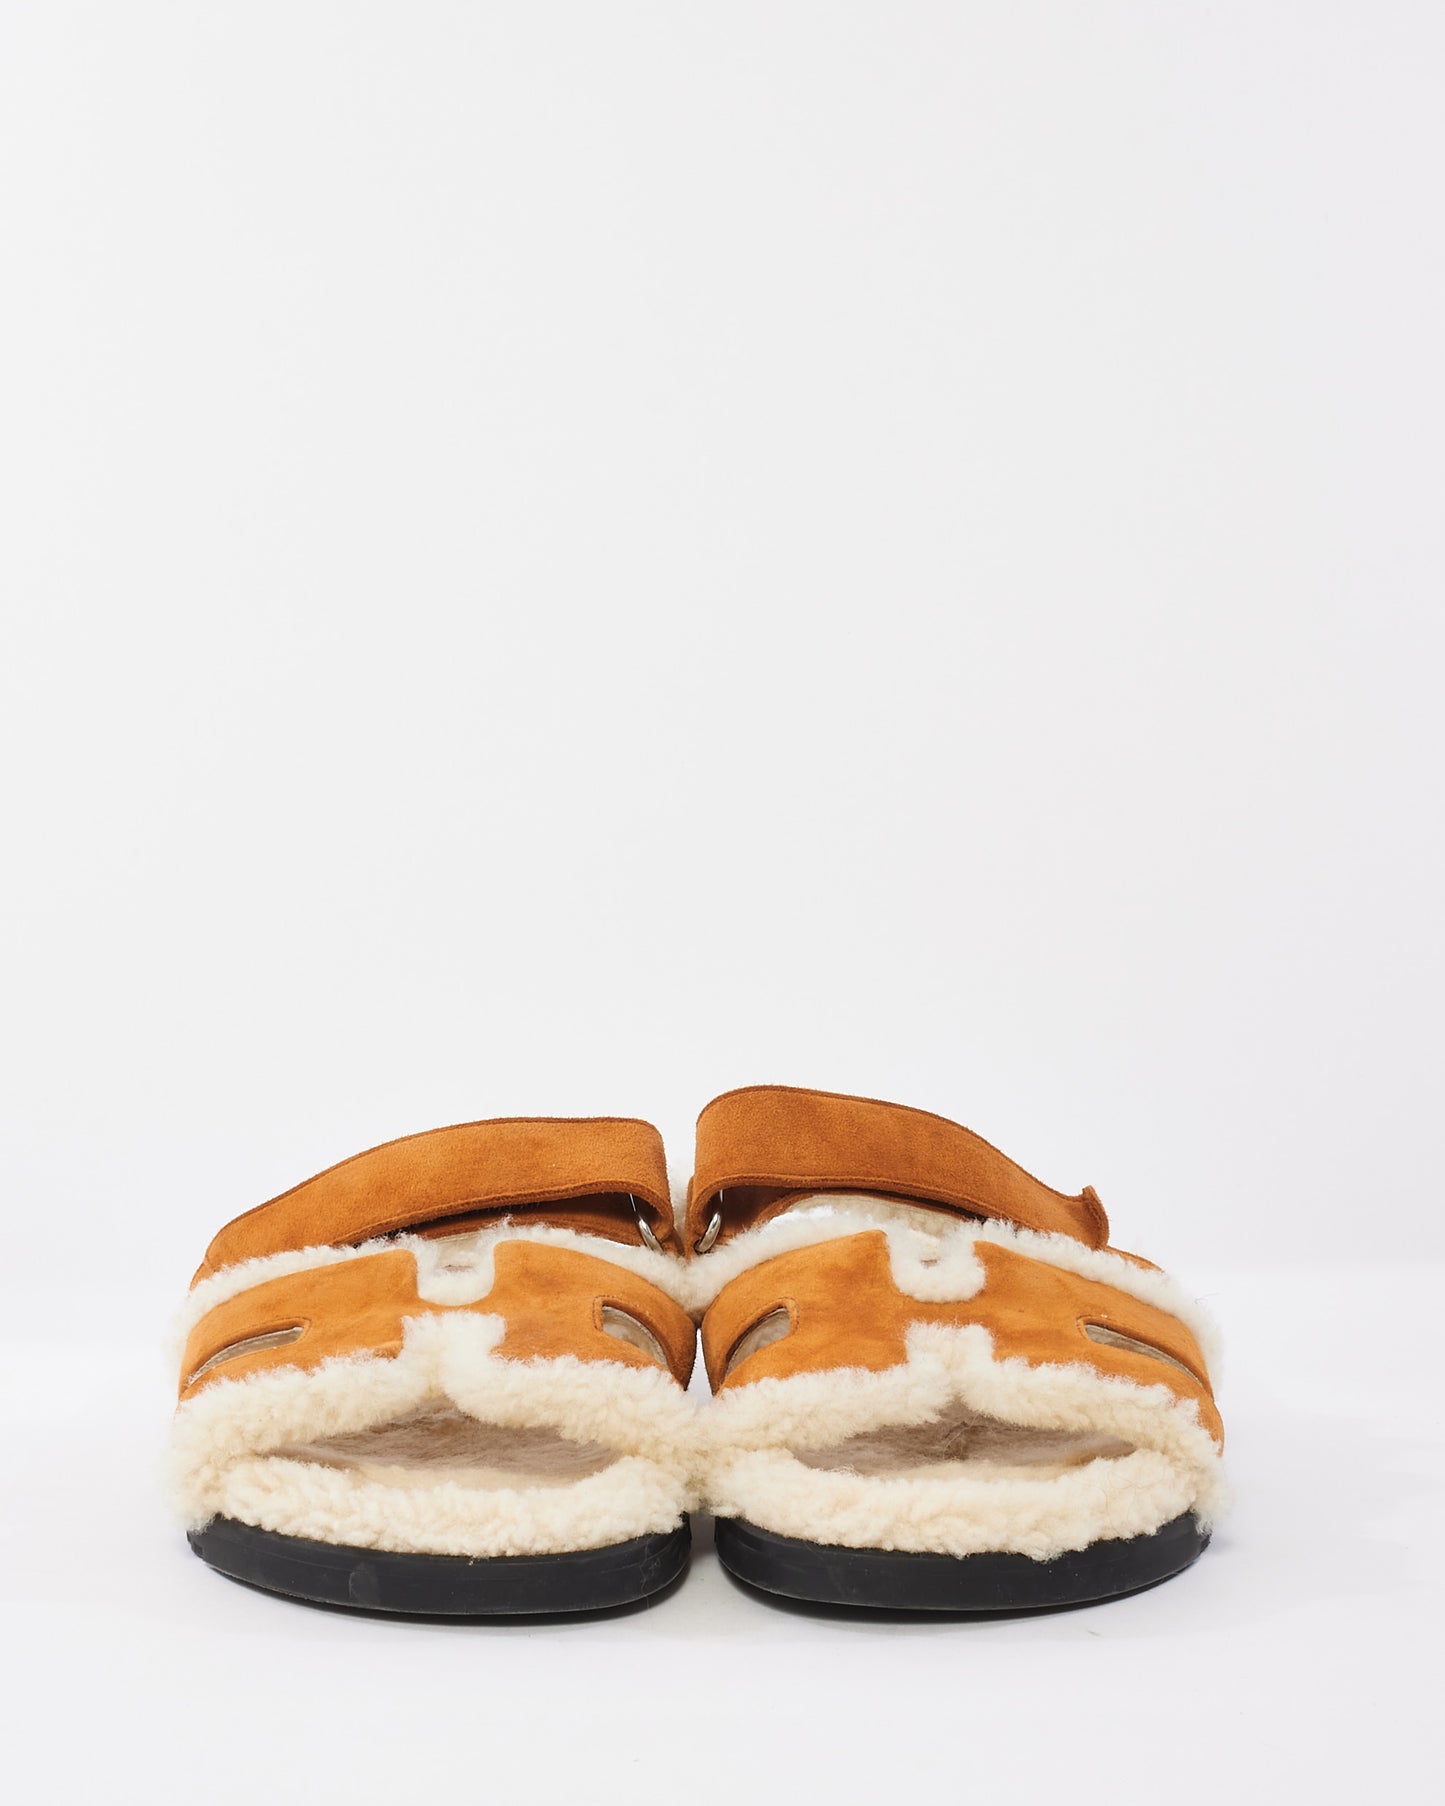 Hermès Tan Suede & Shearling Chypre Sandals - 39